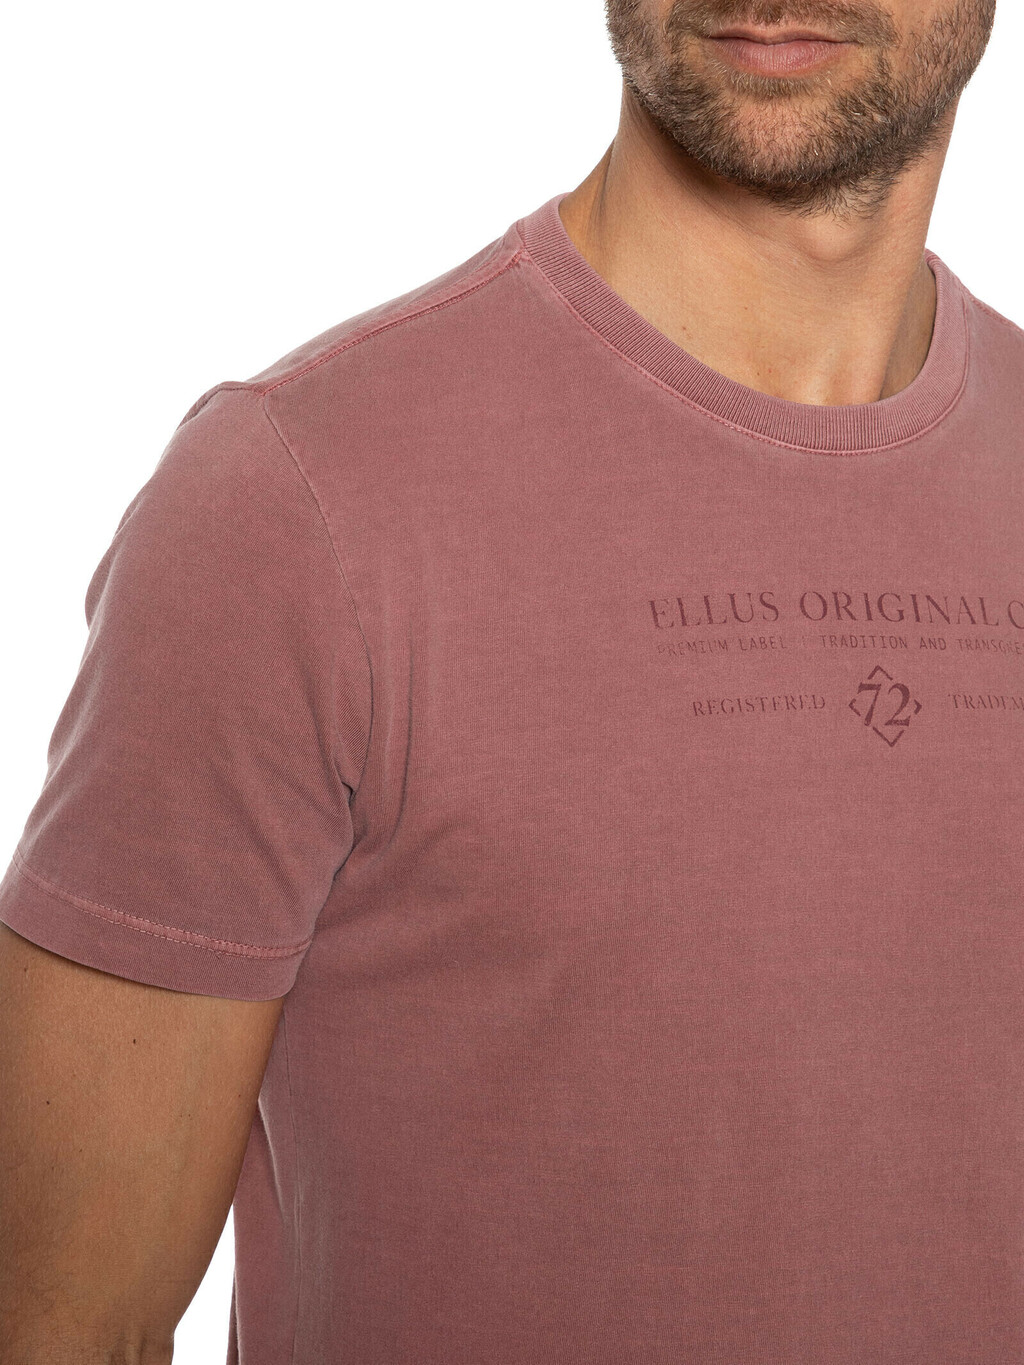 Camiseta Masculina Relax  Compre na Triton! - Camiseta Masculina